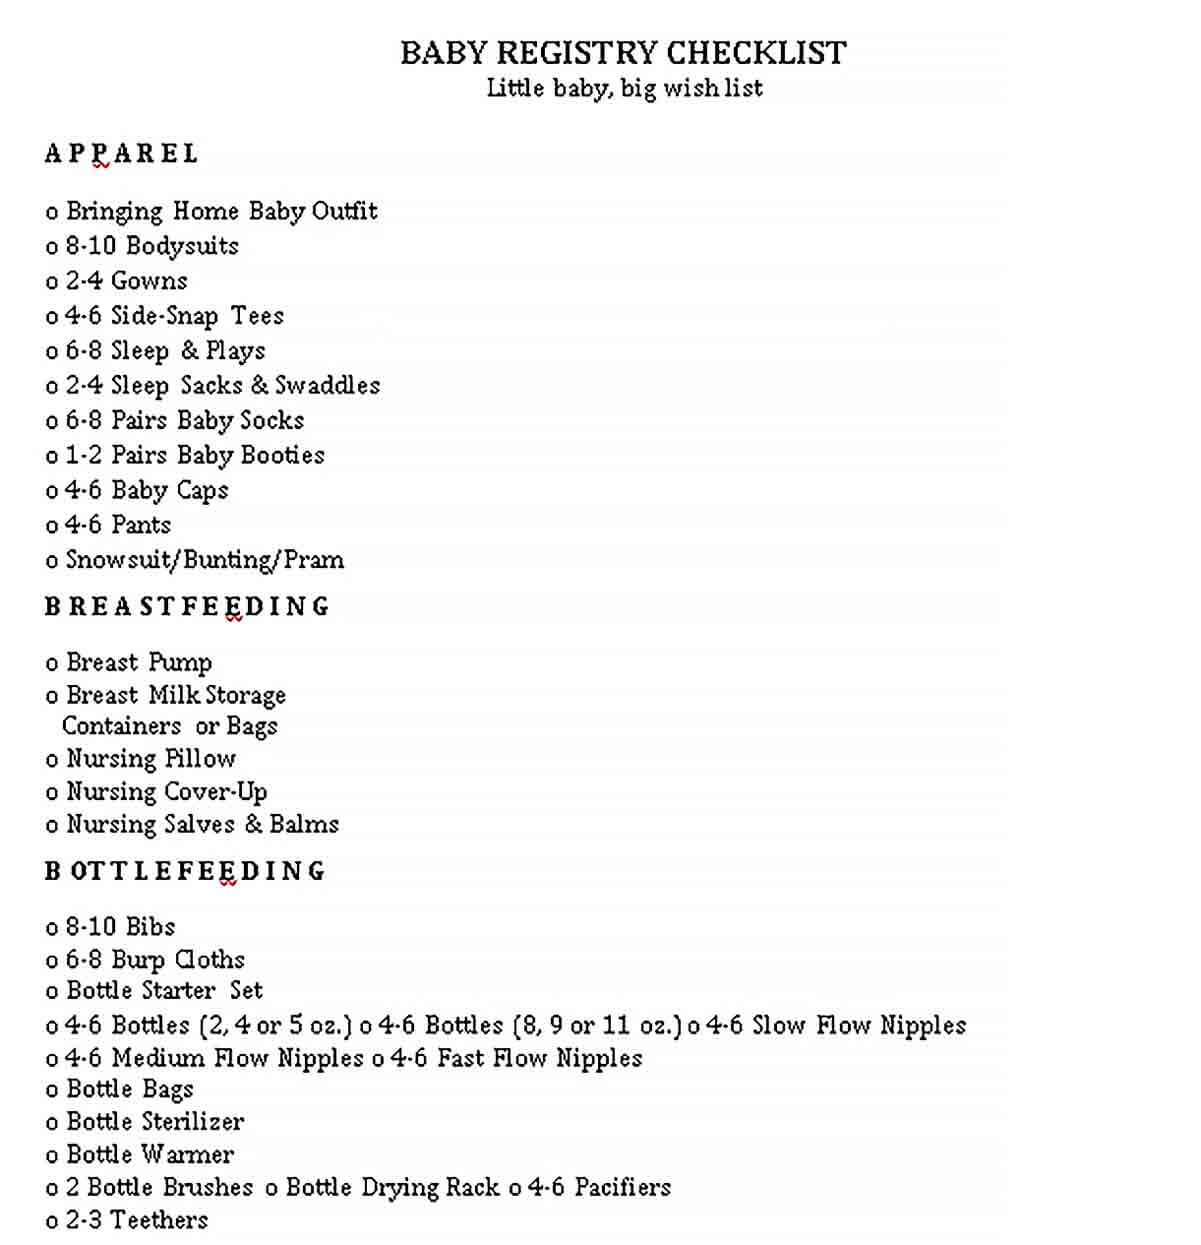 Sample New Baby Registry Checklist